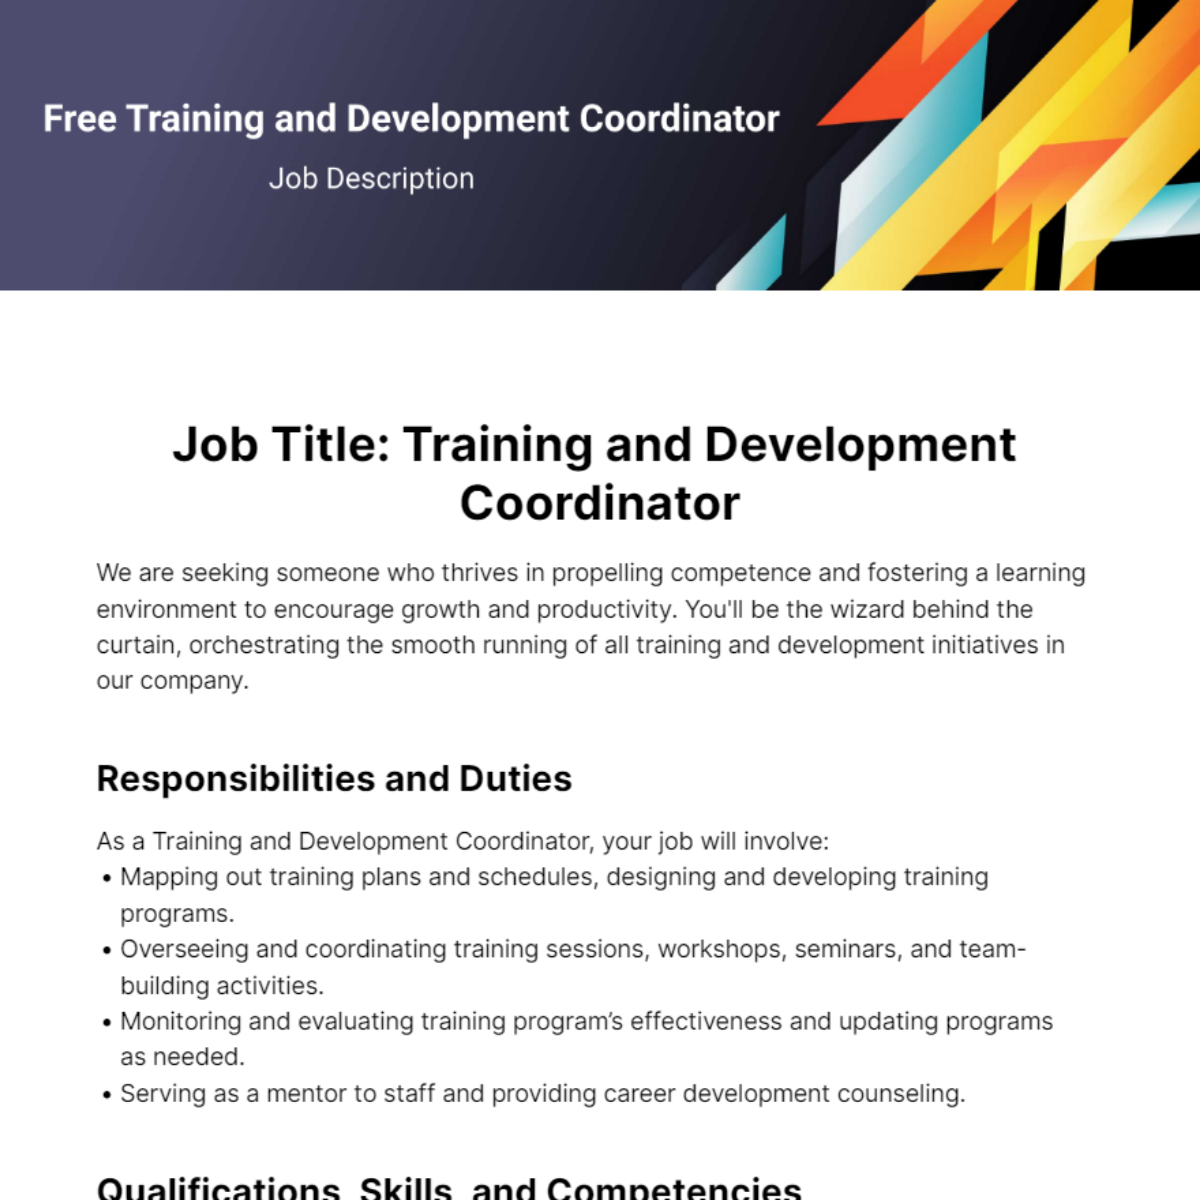 Free Training and Development Coordinator Job Description Template